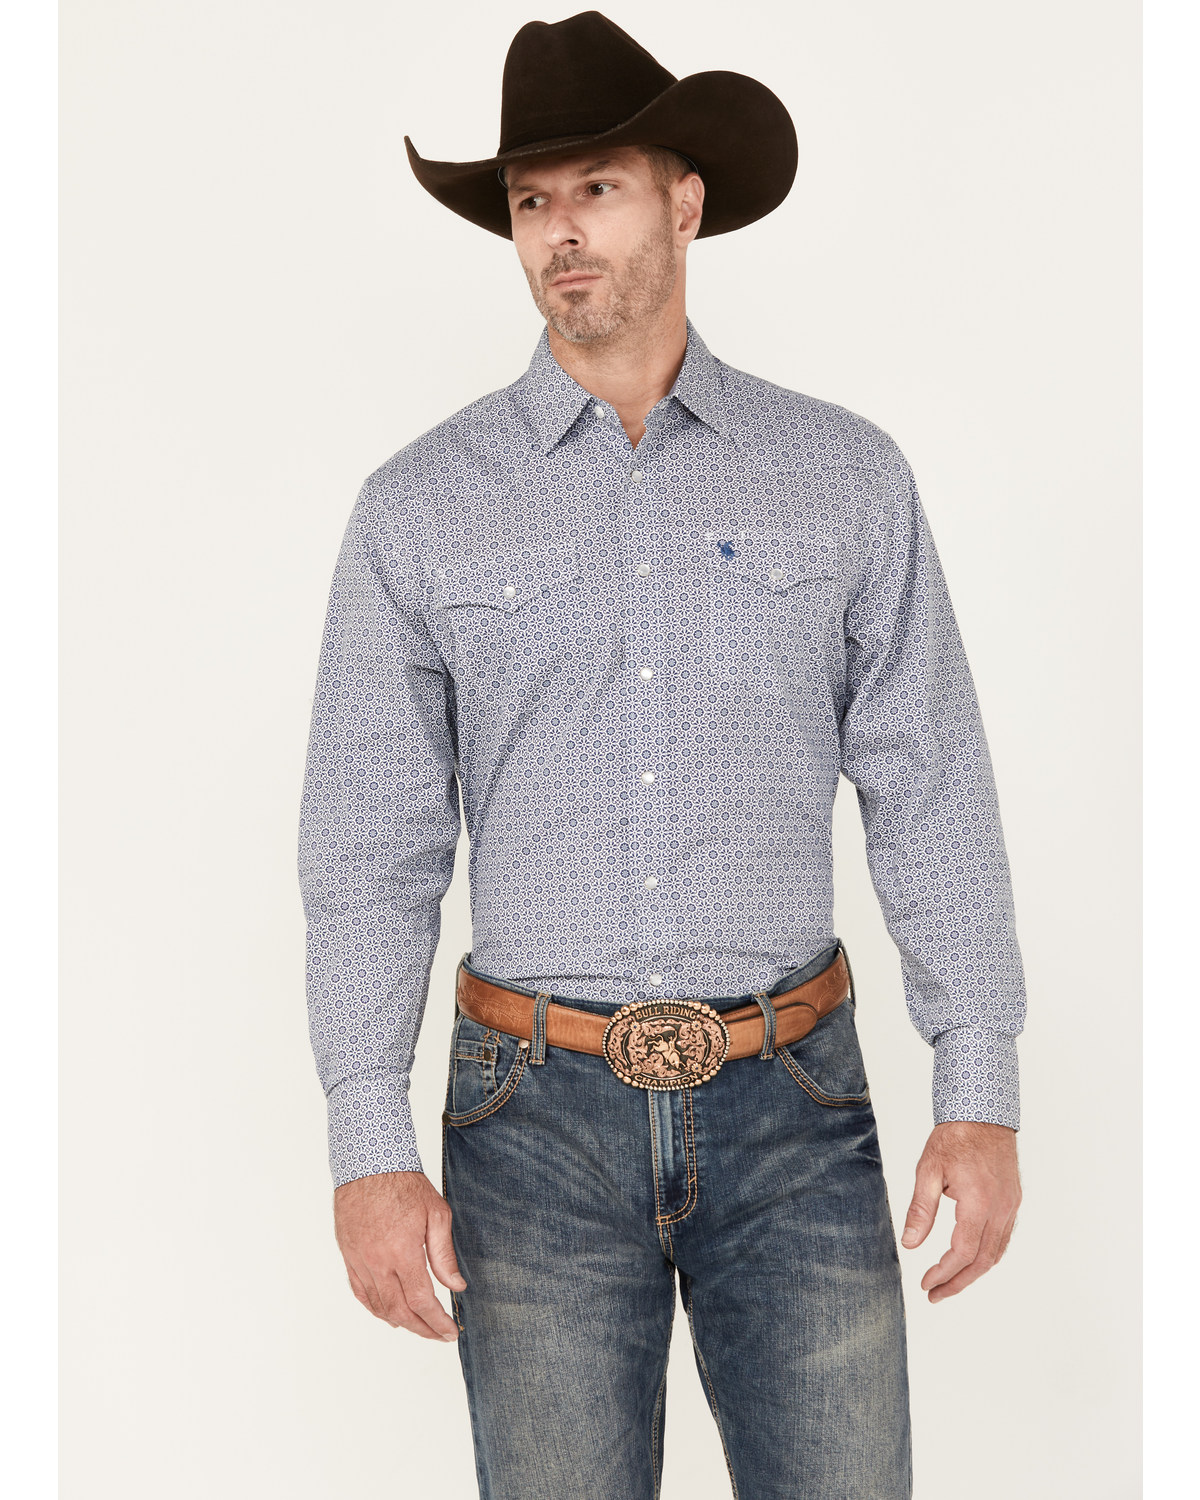 Rodeo Clothing Men's Medallion Print Long Sleeve Pearl Snap Western Shirt